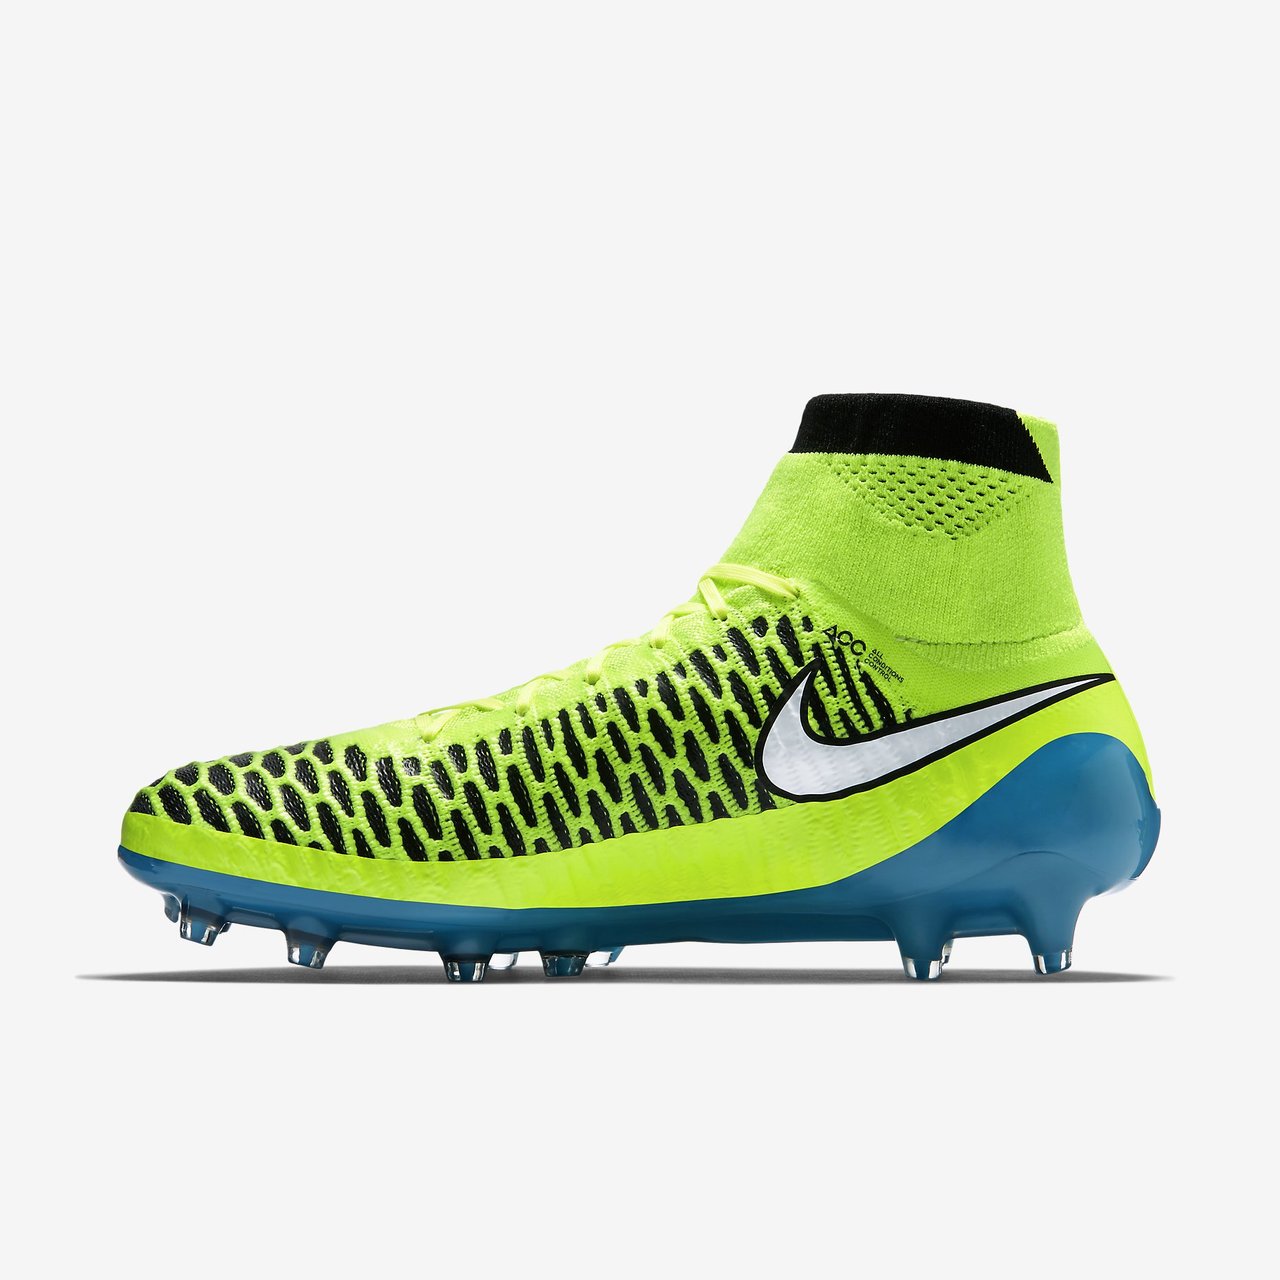 Nike Magista Obra SG Football Boots size 11 in L5 Liverpool